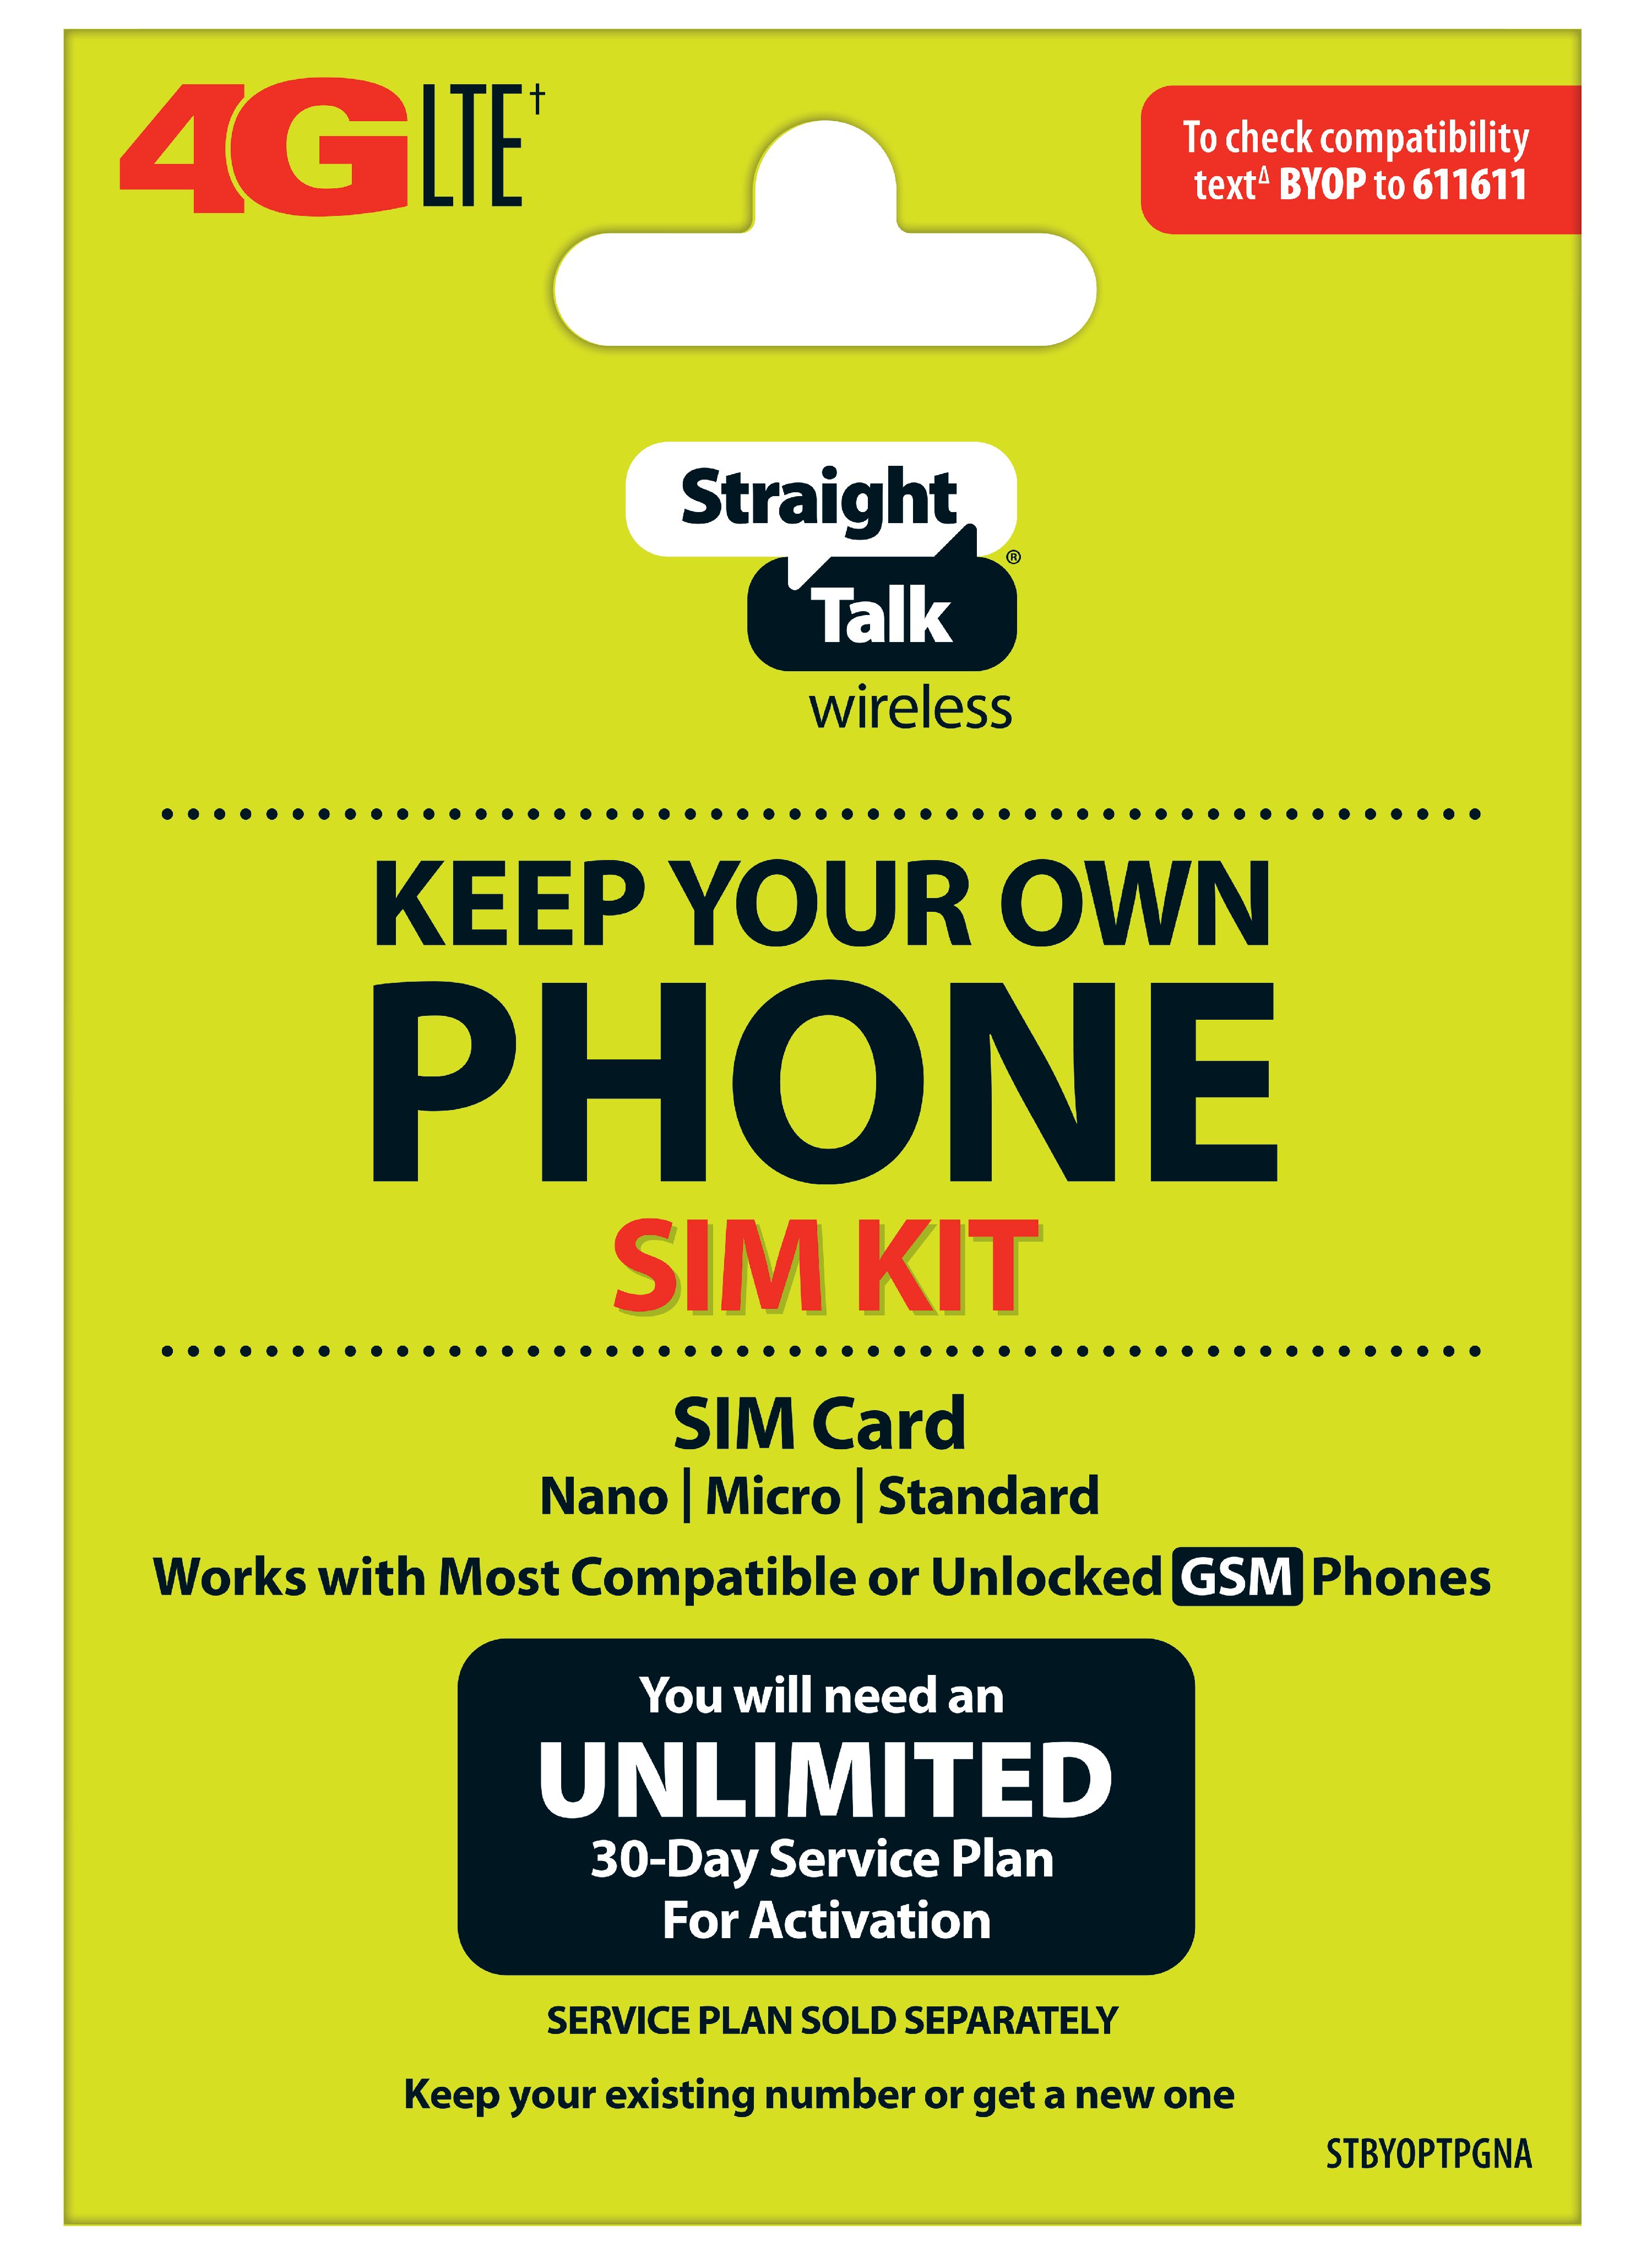 Straight Talk iPhone Sim Card Kit - image 1 of 2